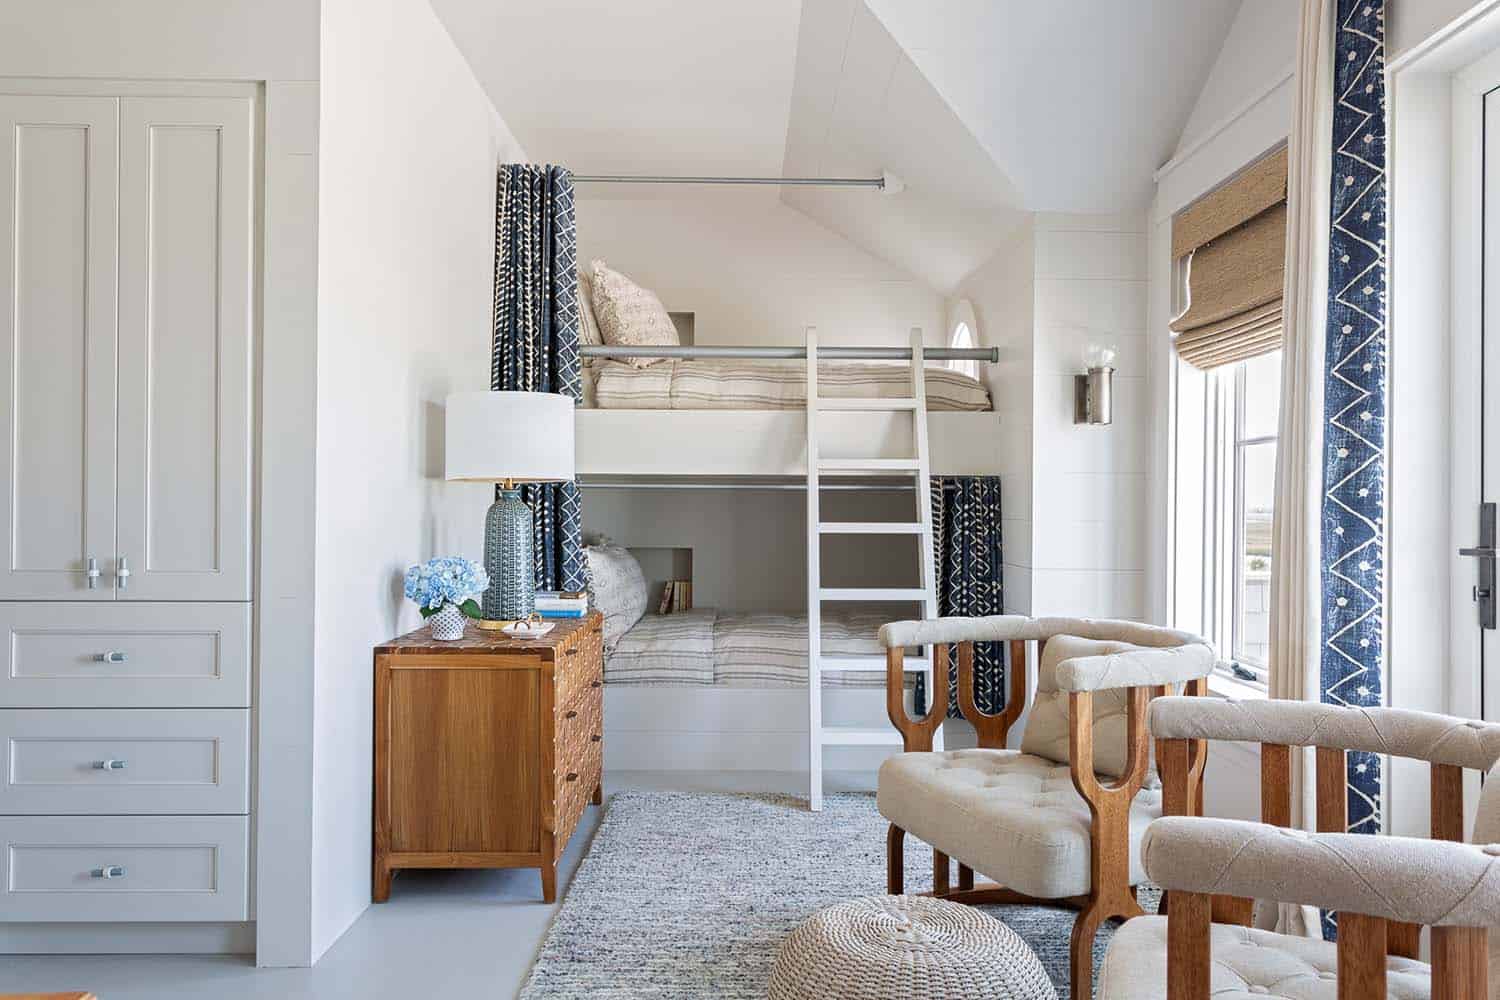 beach-style-bunk-bedroom